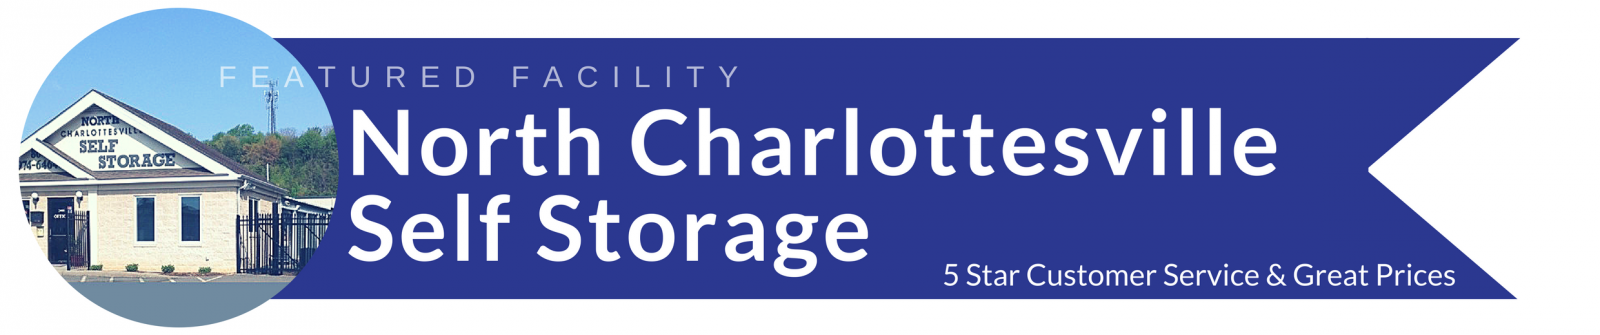 North Charlottesville Self Storage Featured Facility